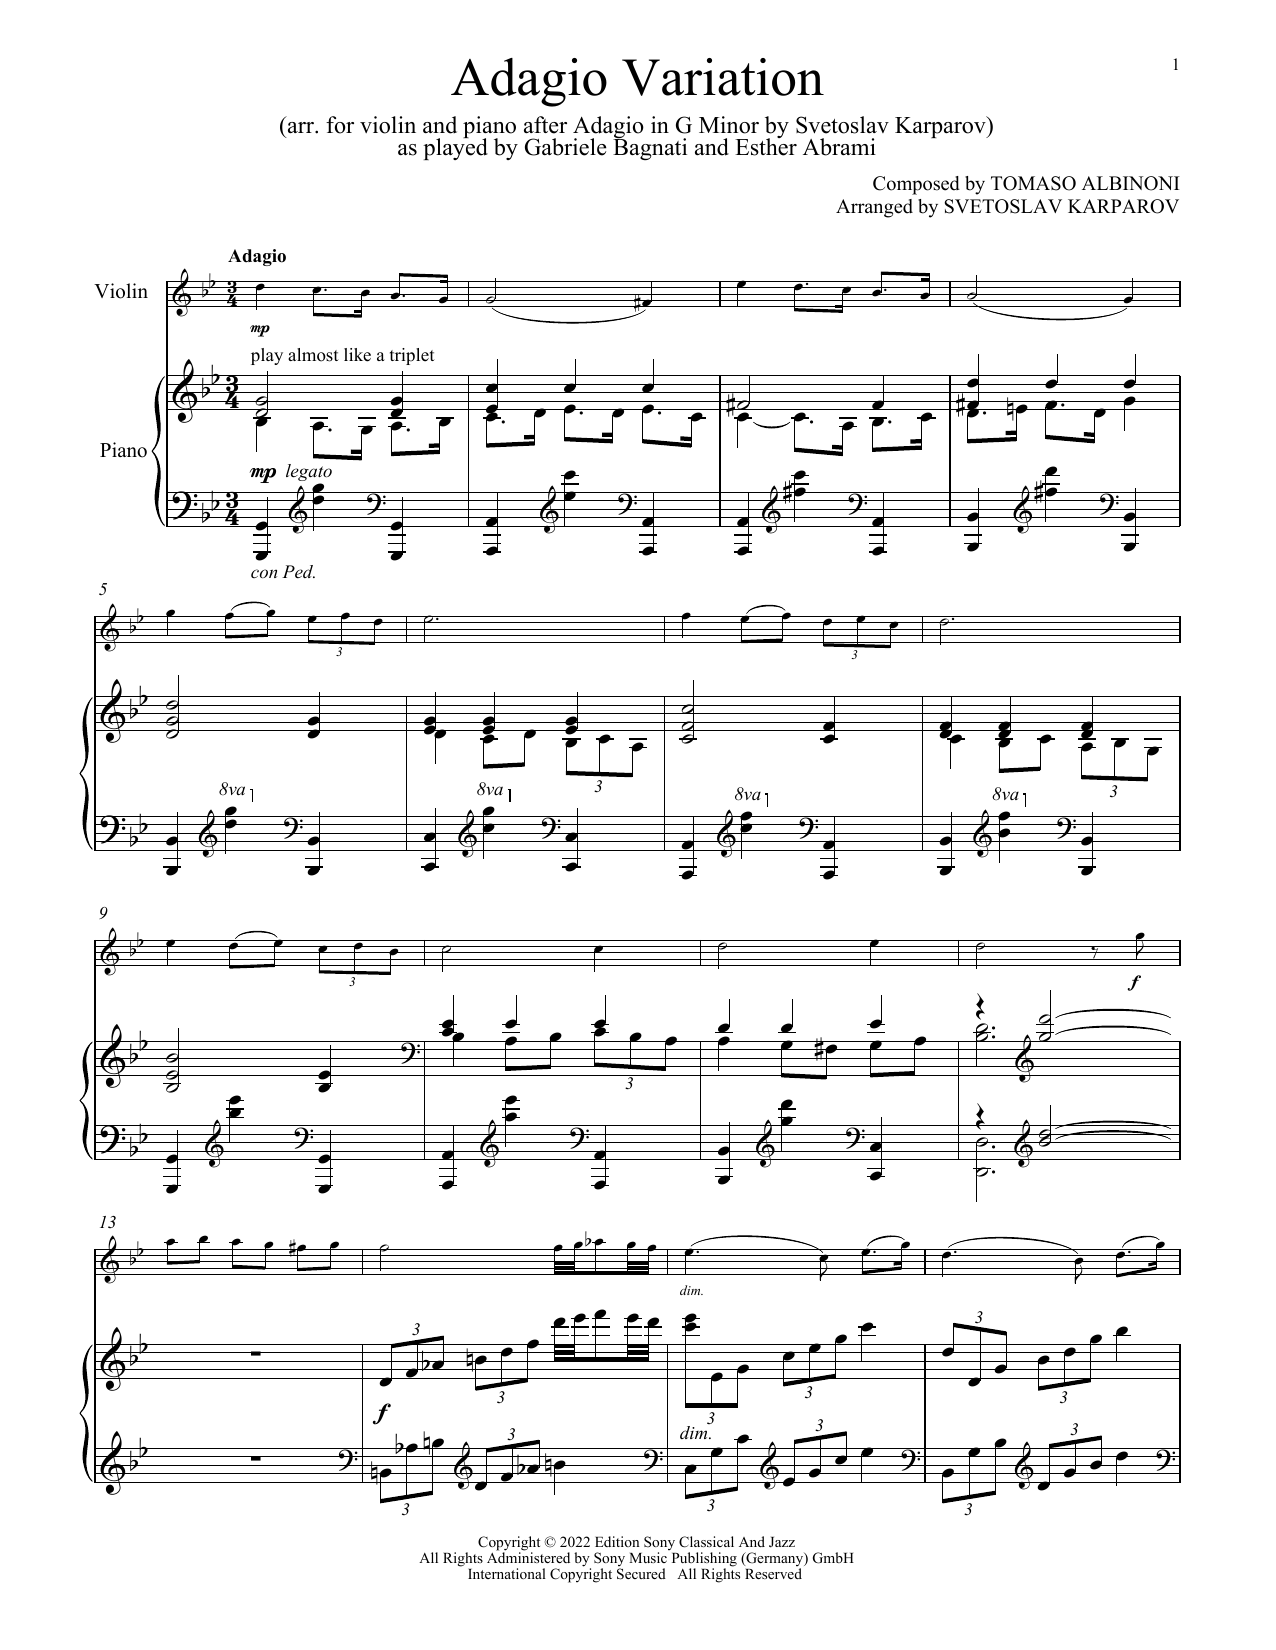 Gabriele Bagnati and Esther Abrami Adagio Variation (arr. Svetoslav Karparov) Sheet Music Notes & Chords for Violin and Piano - Download or Print PDF